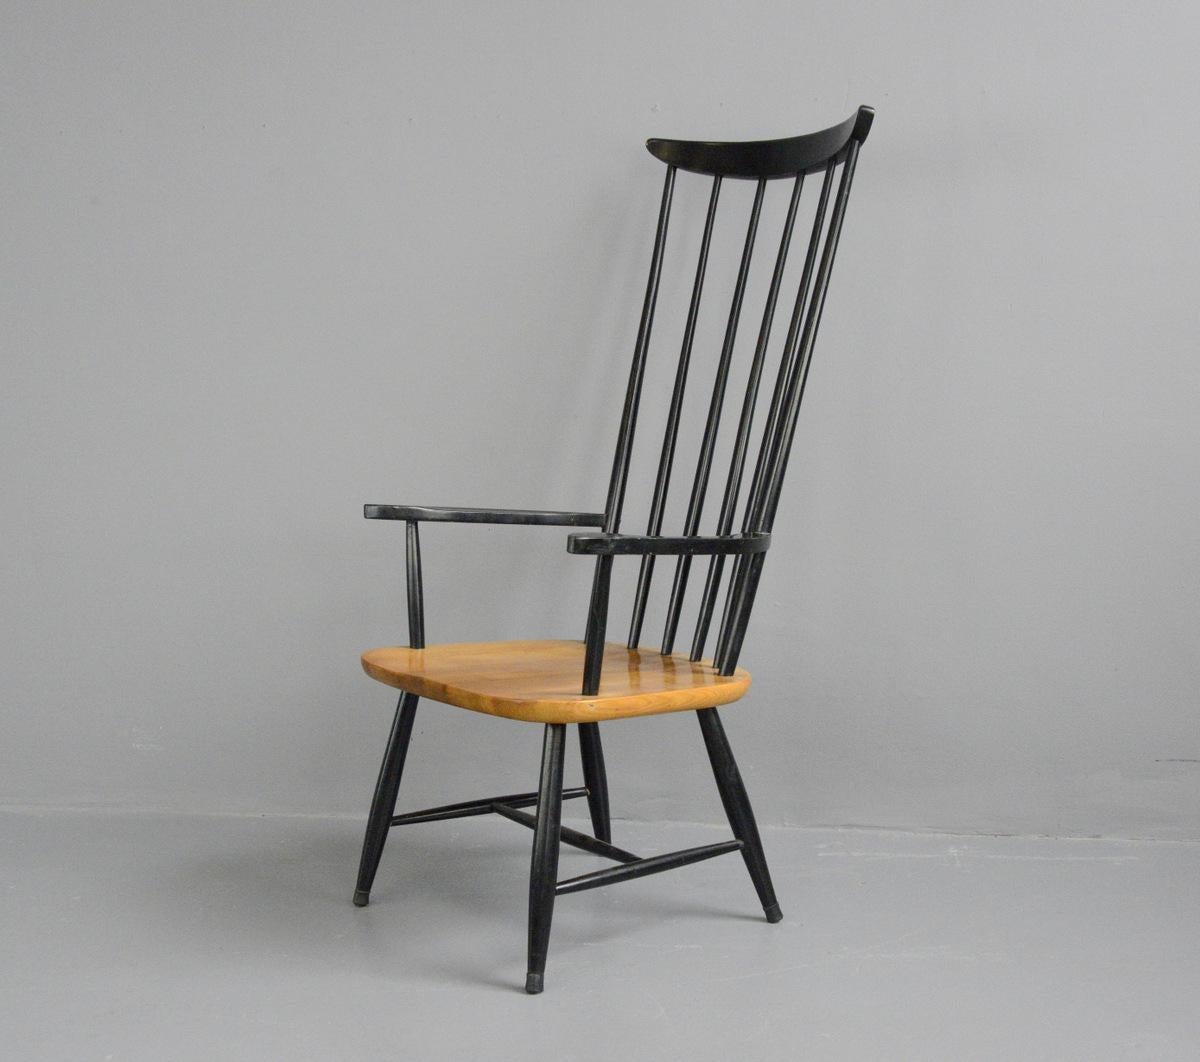 High back midcentury chair by Ilmari Tapiovaara, circa 1960s

- Teak seat with beech legs and spindles
- Designed by Ilmari Tapiovaara
- Finnish, 1960s
- Measures: 53cm wide x 48cm deep x 112cm tall
- 38cm seat height

In 1937 he graduated